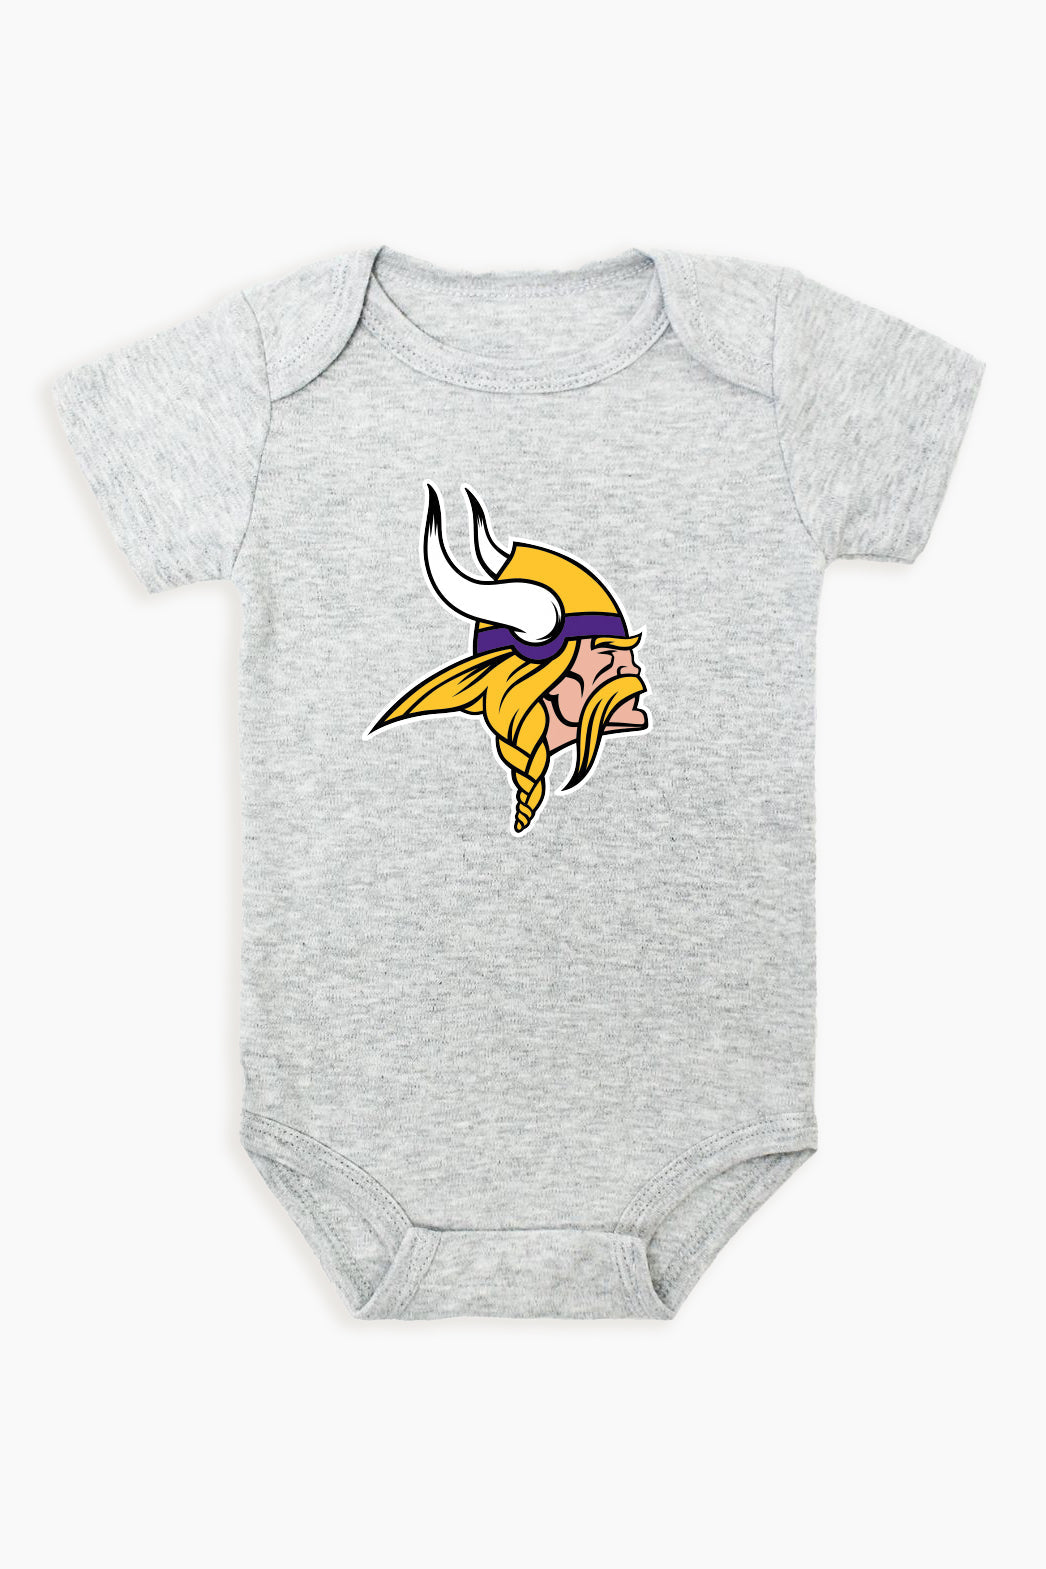 NFL Grey Baby Short-Sleeve Bodysuit - NFC Division